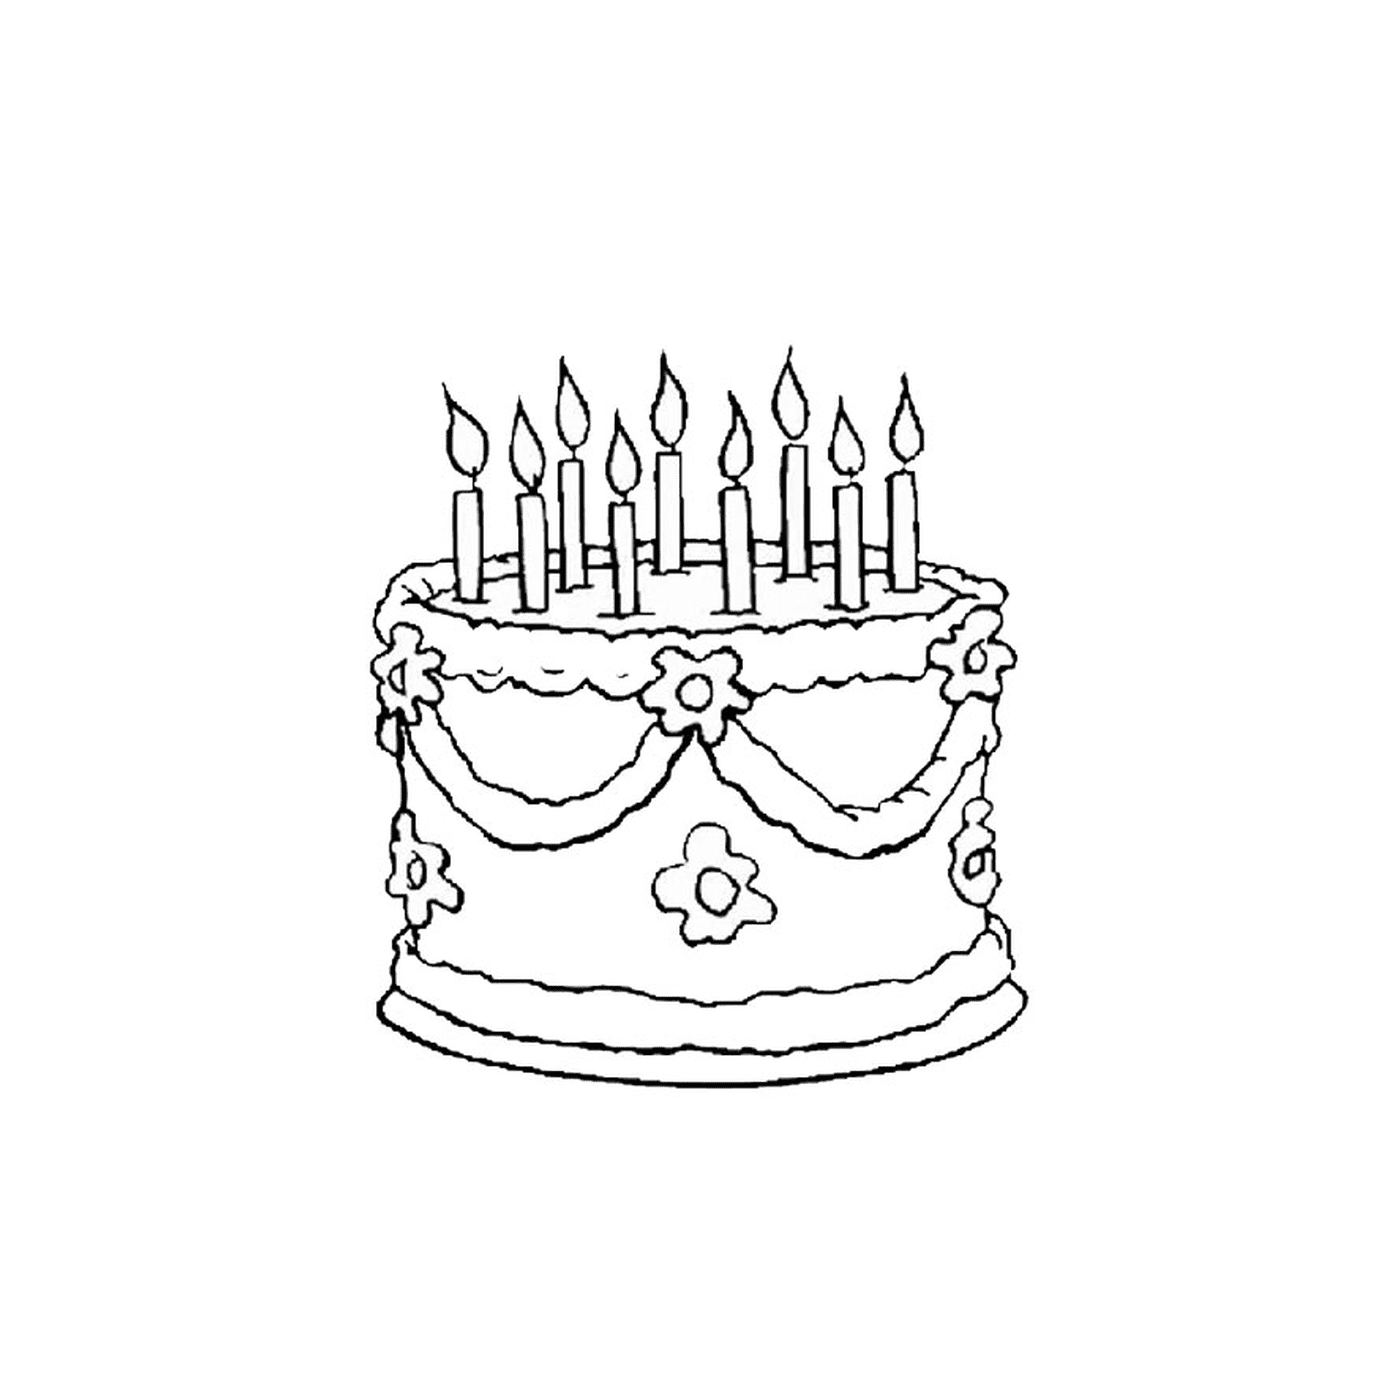  a birthday cake 